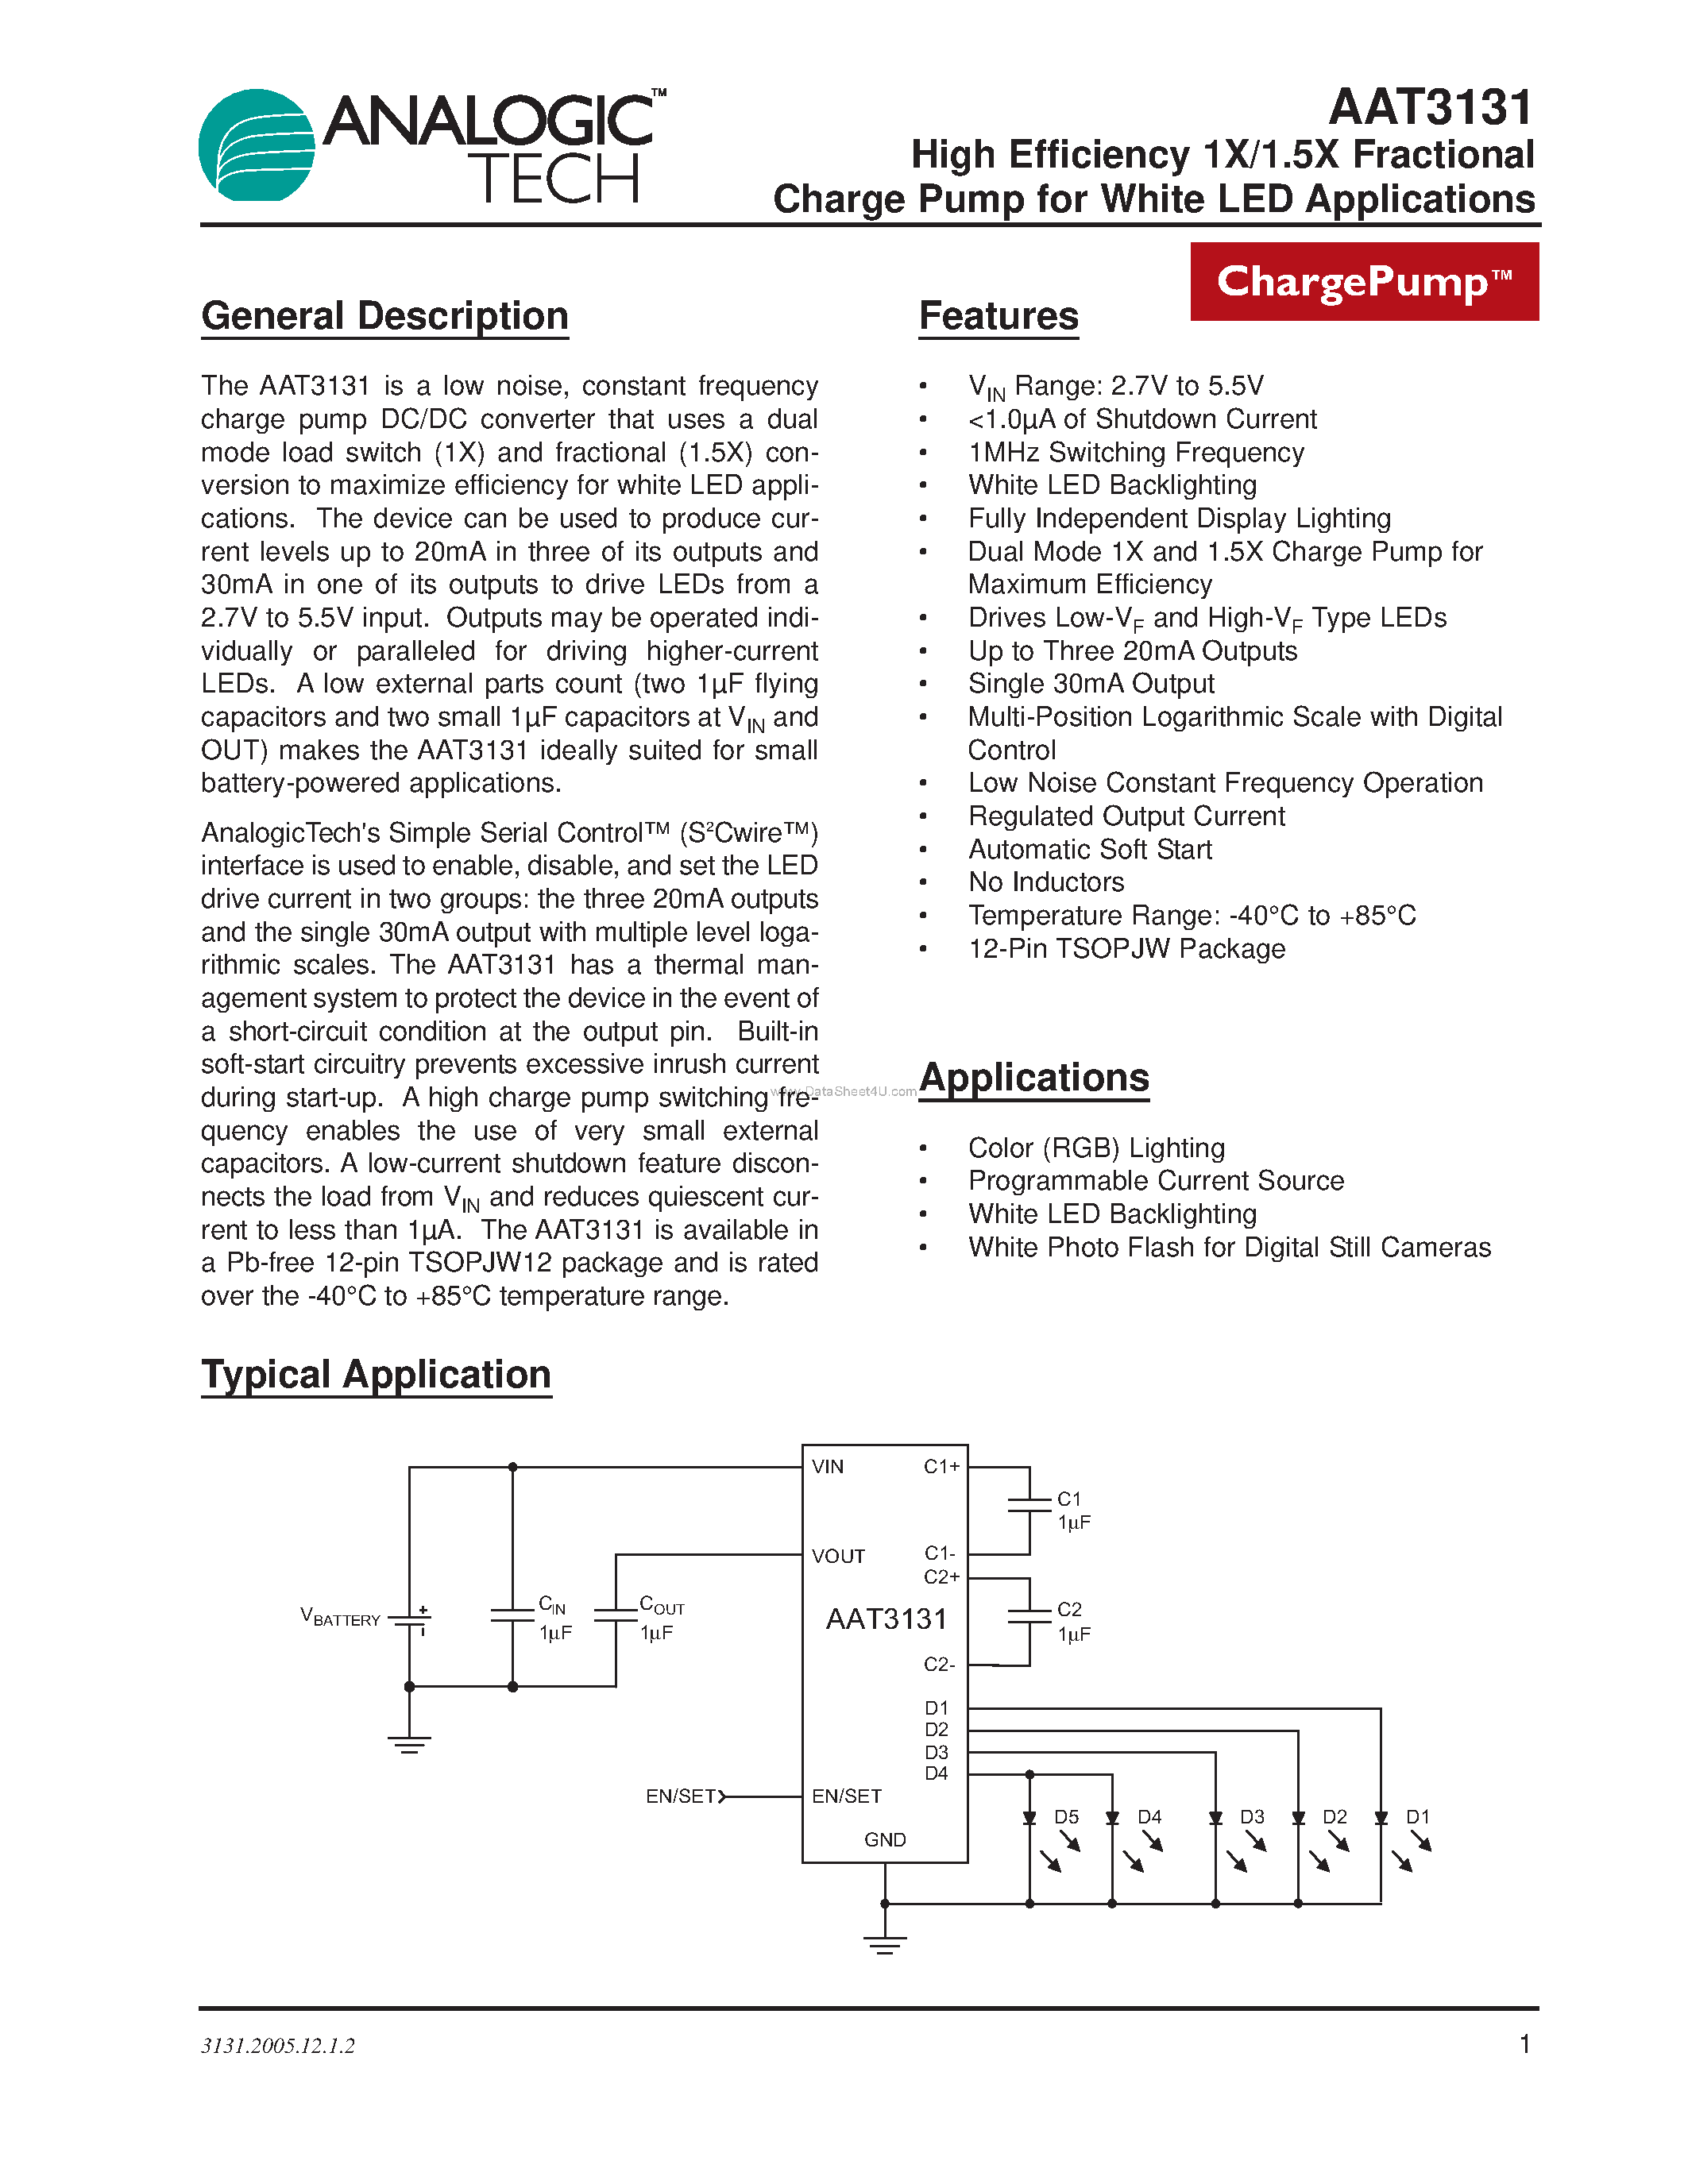 Даташит AAT3131 - High Efficiency 1X/1.5X Fractional Charge Pump страница 1